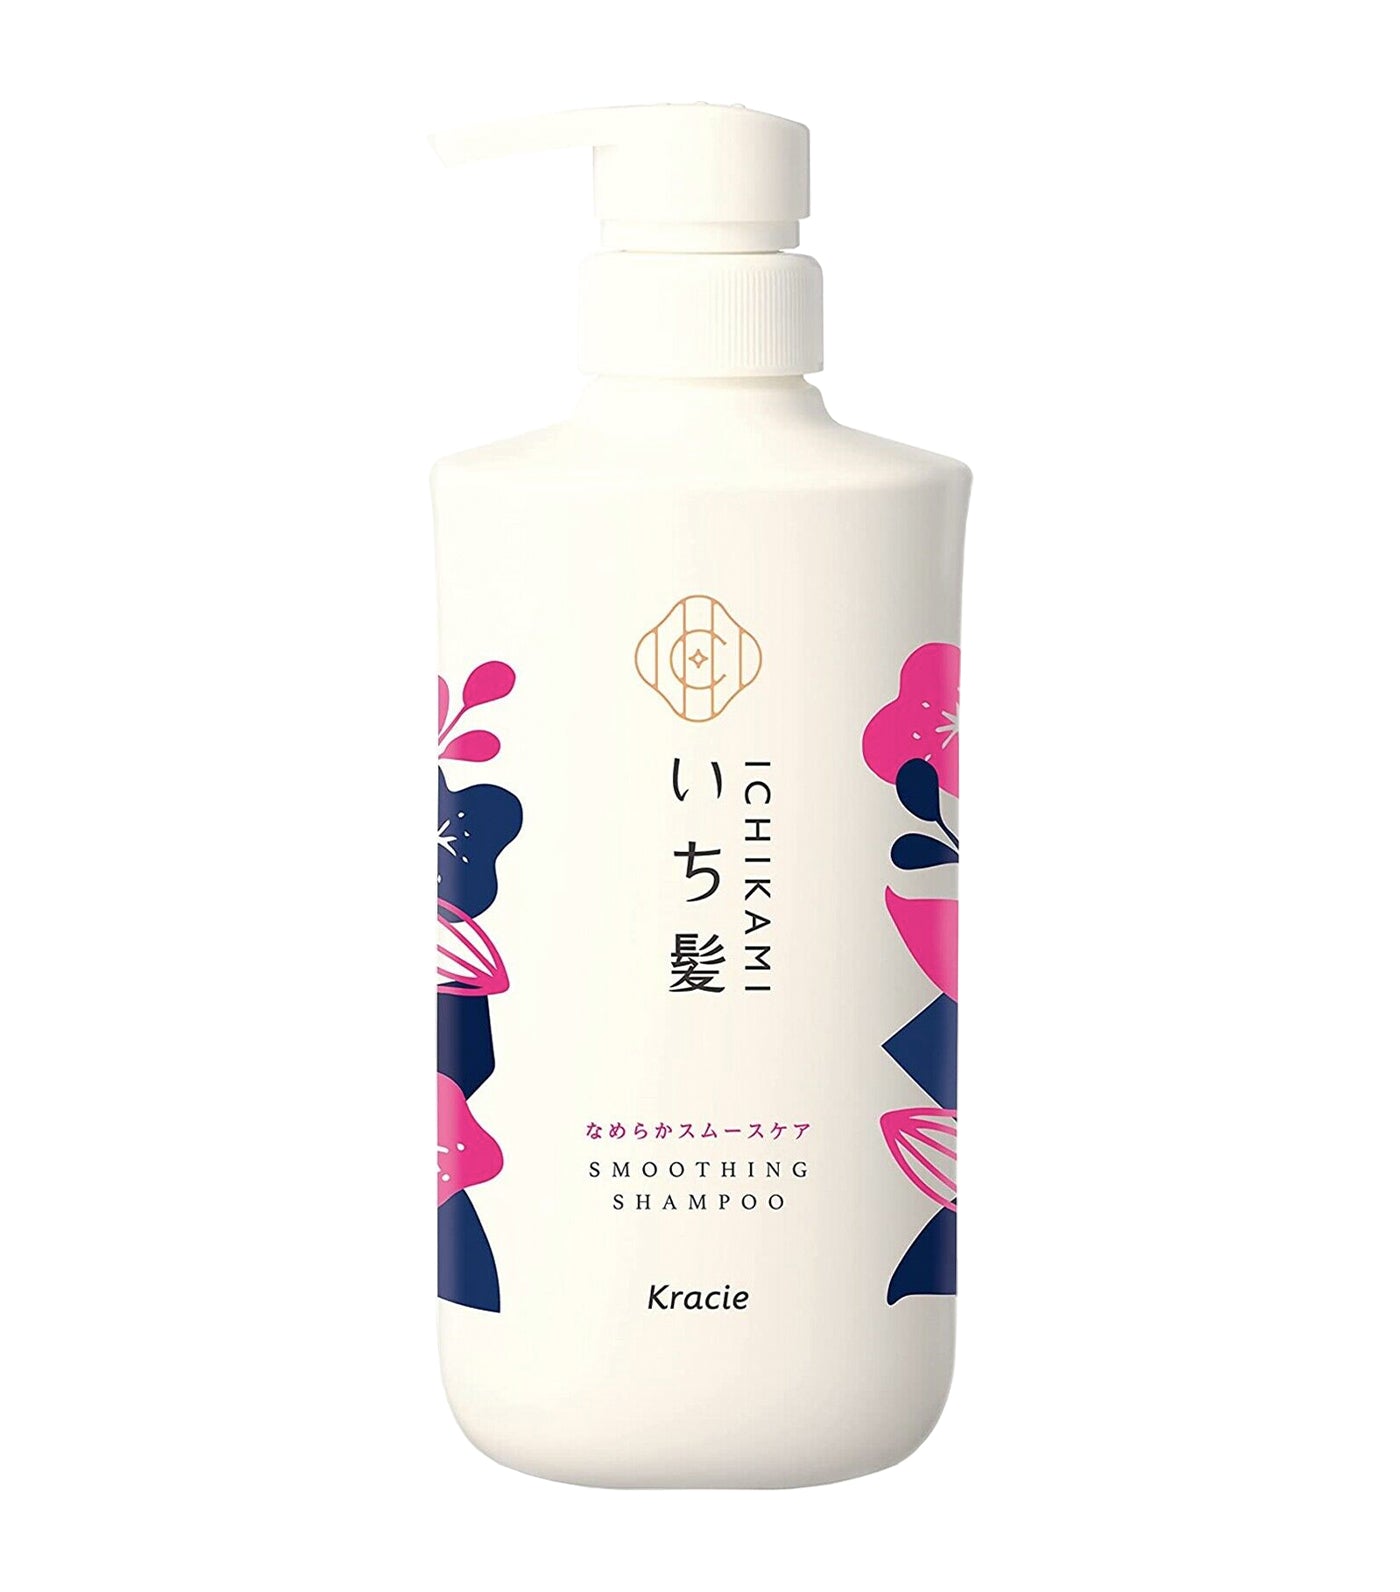 Ichikami Smoothing Shampoo